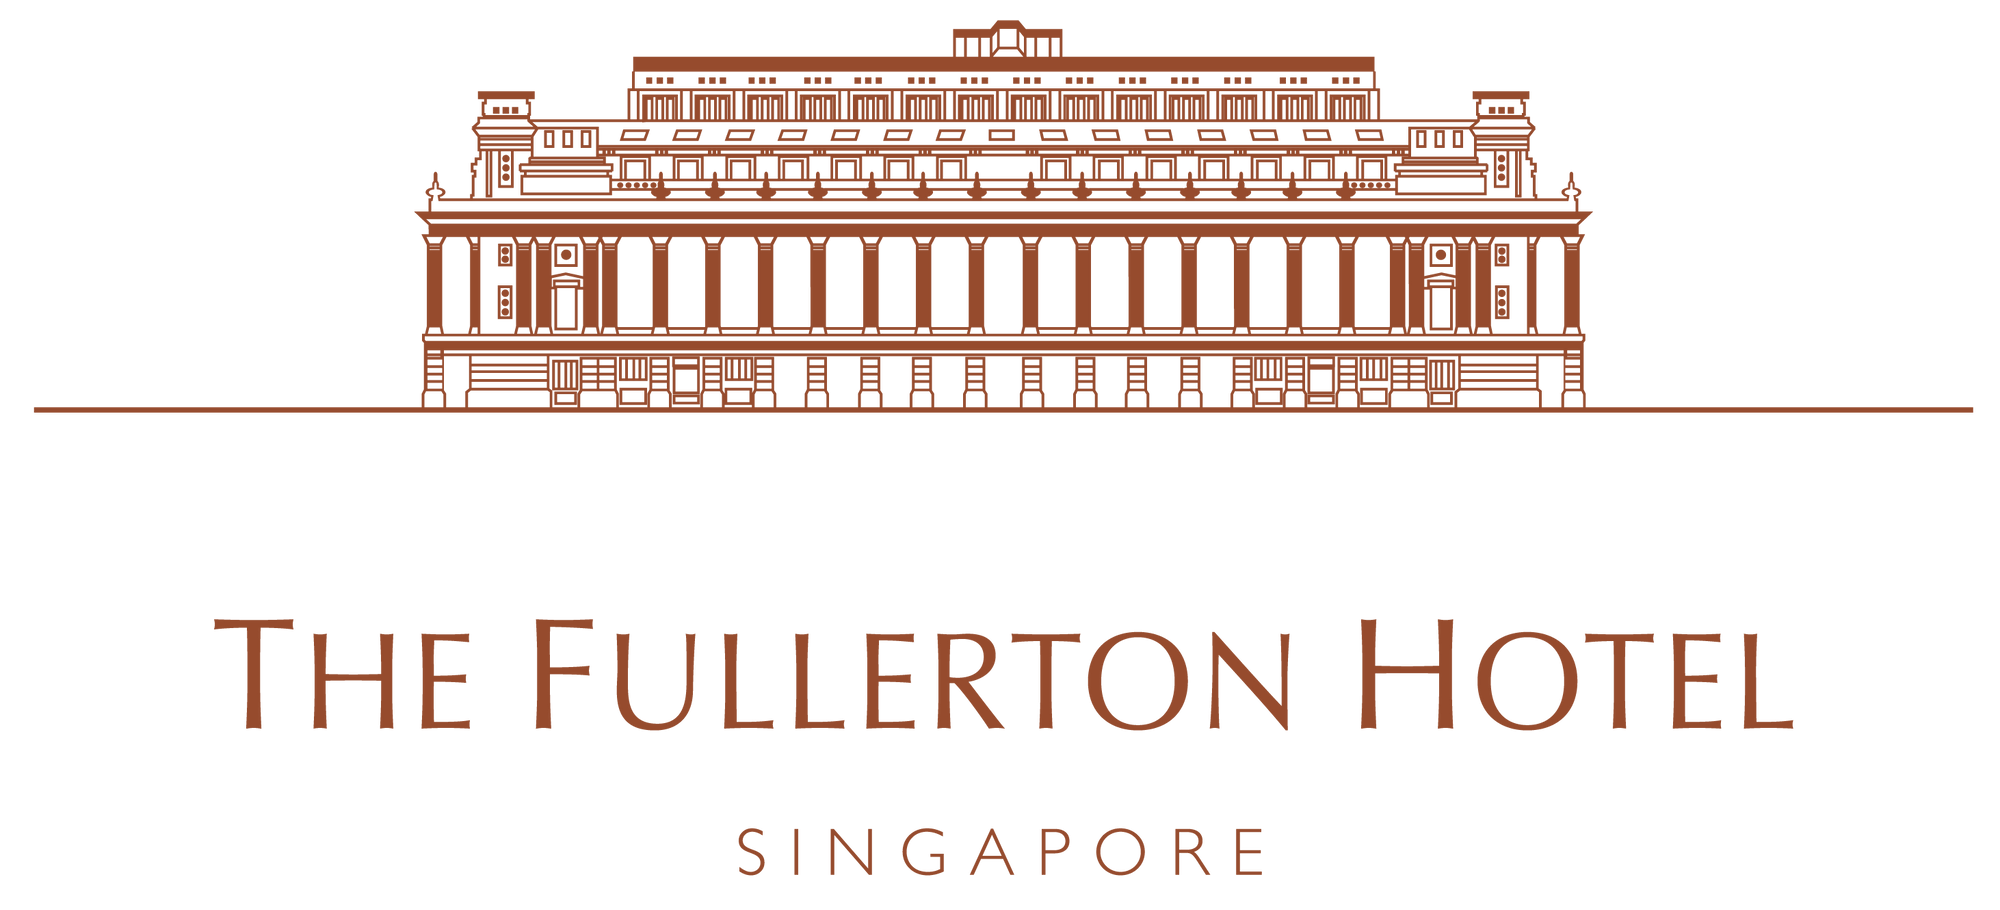 
The Fullerton Hotel Singapore
   in Singapore